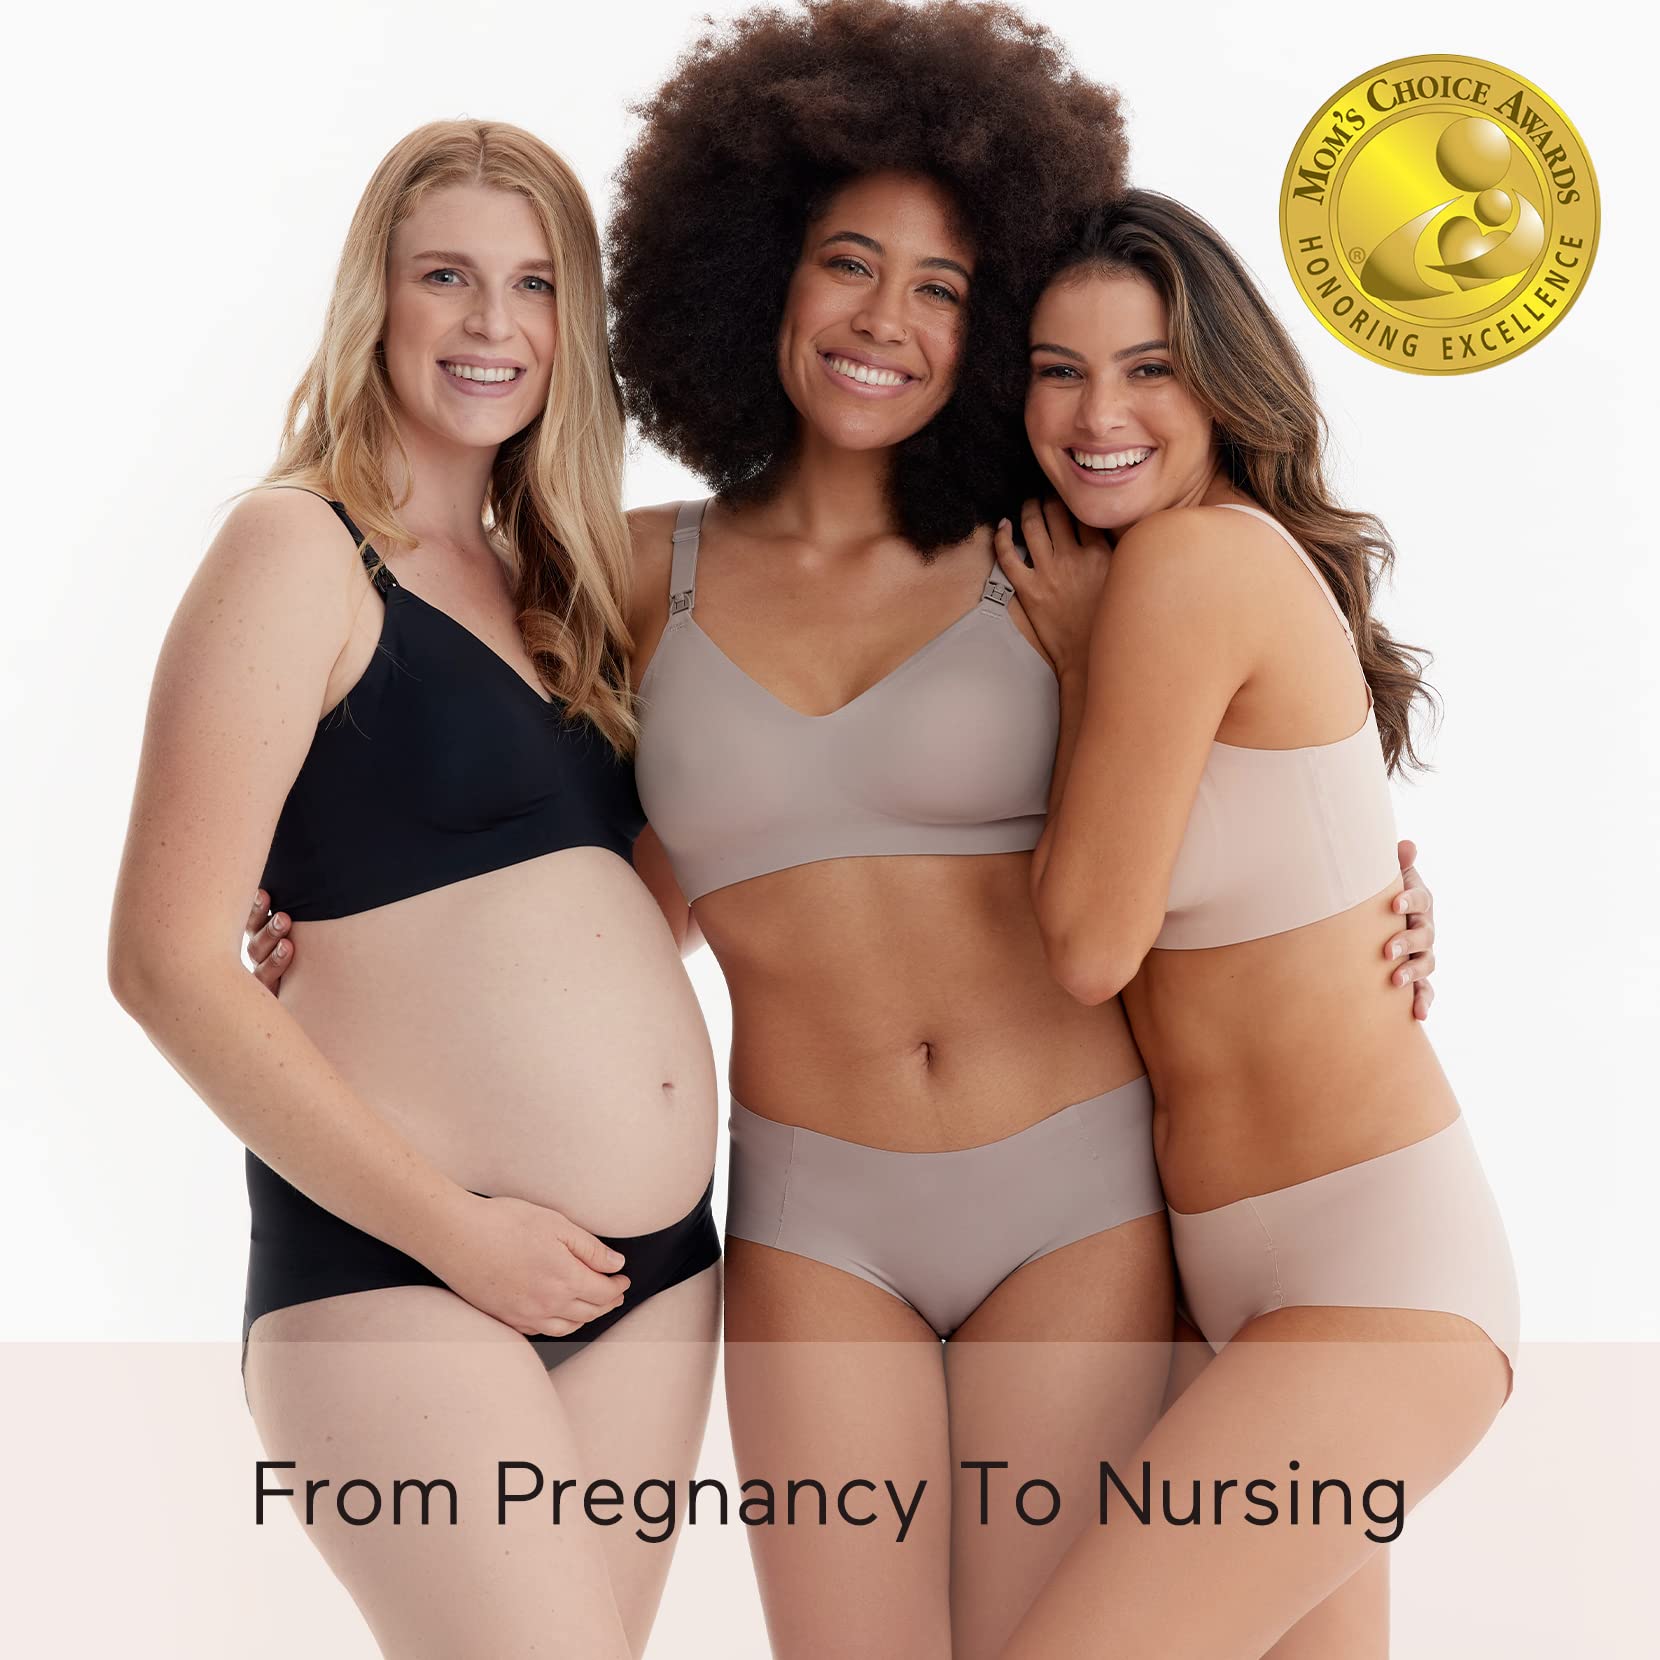 Momcozy Nursing Bras for Breastfeeding, YN21 Seamless Ultra Comfort Maternity Bra, Natural Shape, Pregnancy Sleep Bralette